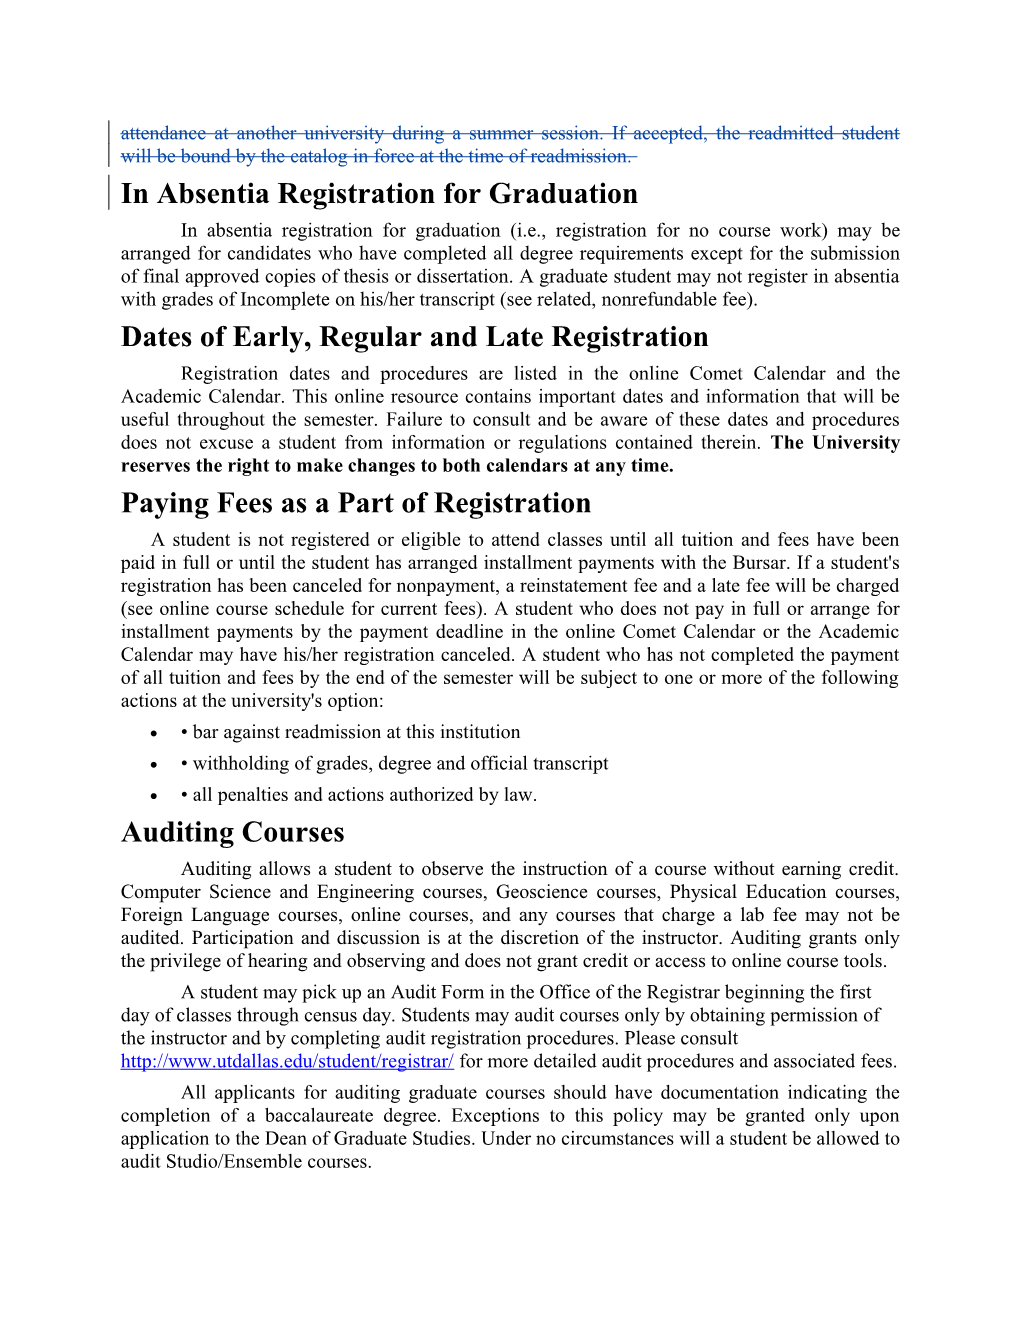 Registration and Enrollment Requirements